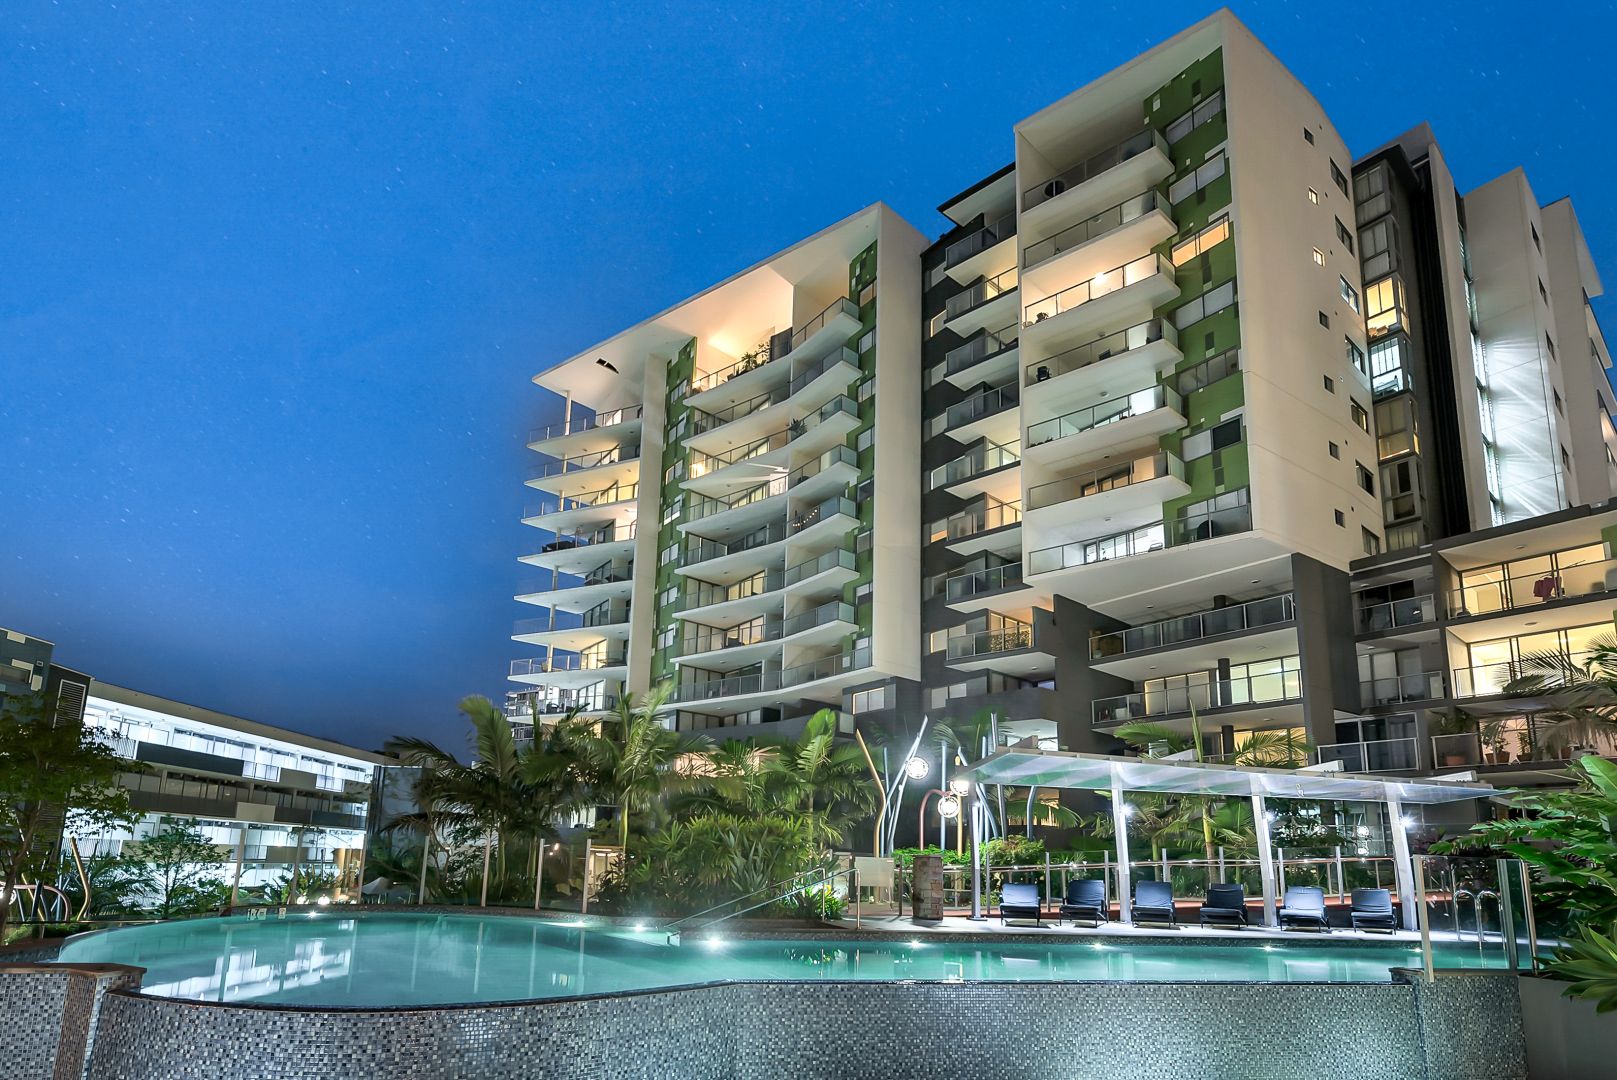 Exterior - Urban Edge Apartments - Brisbane - Urban Rest